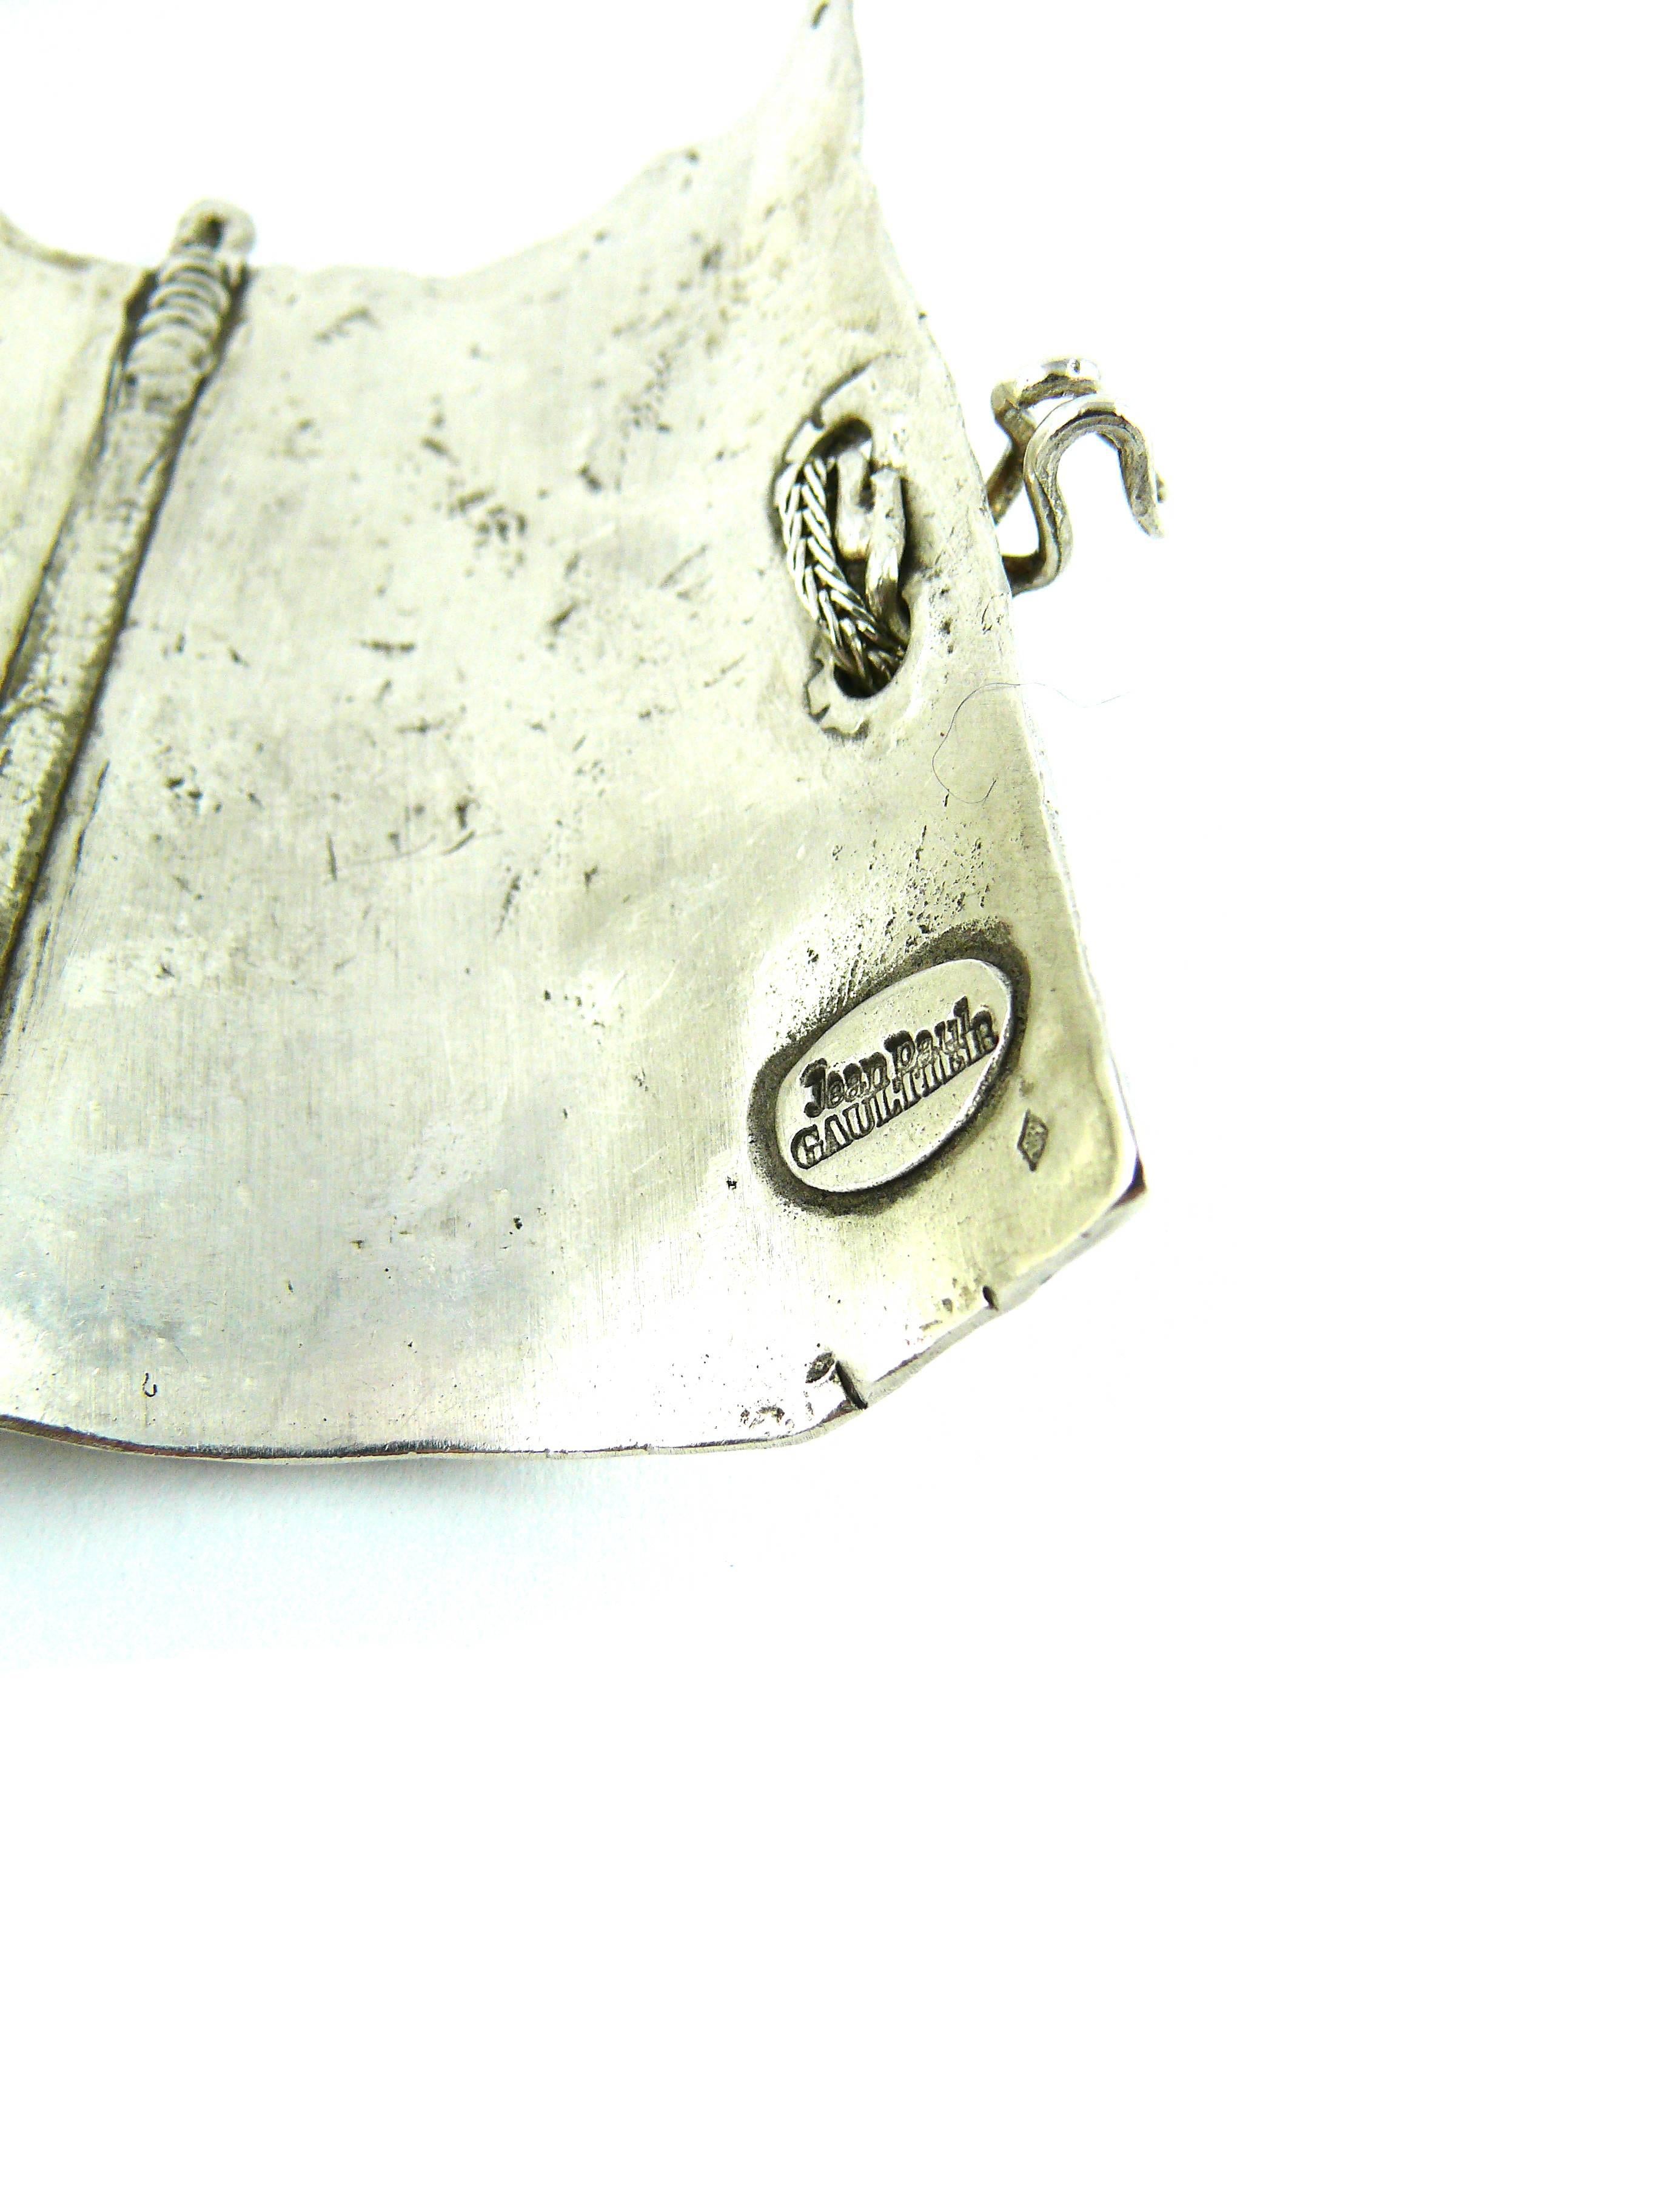 Jean Paul Gaultier Rare Sterling Silver Iconic Corset Cuff Bracelet 1